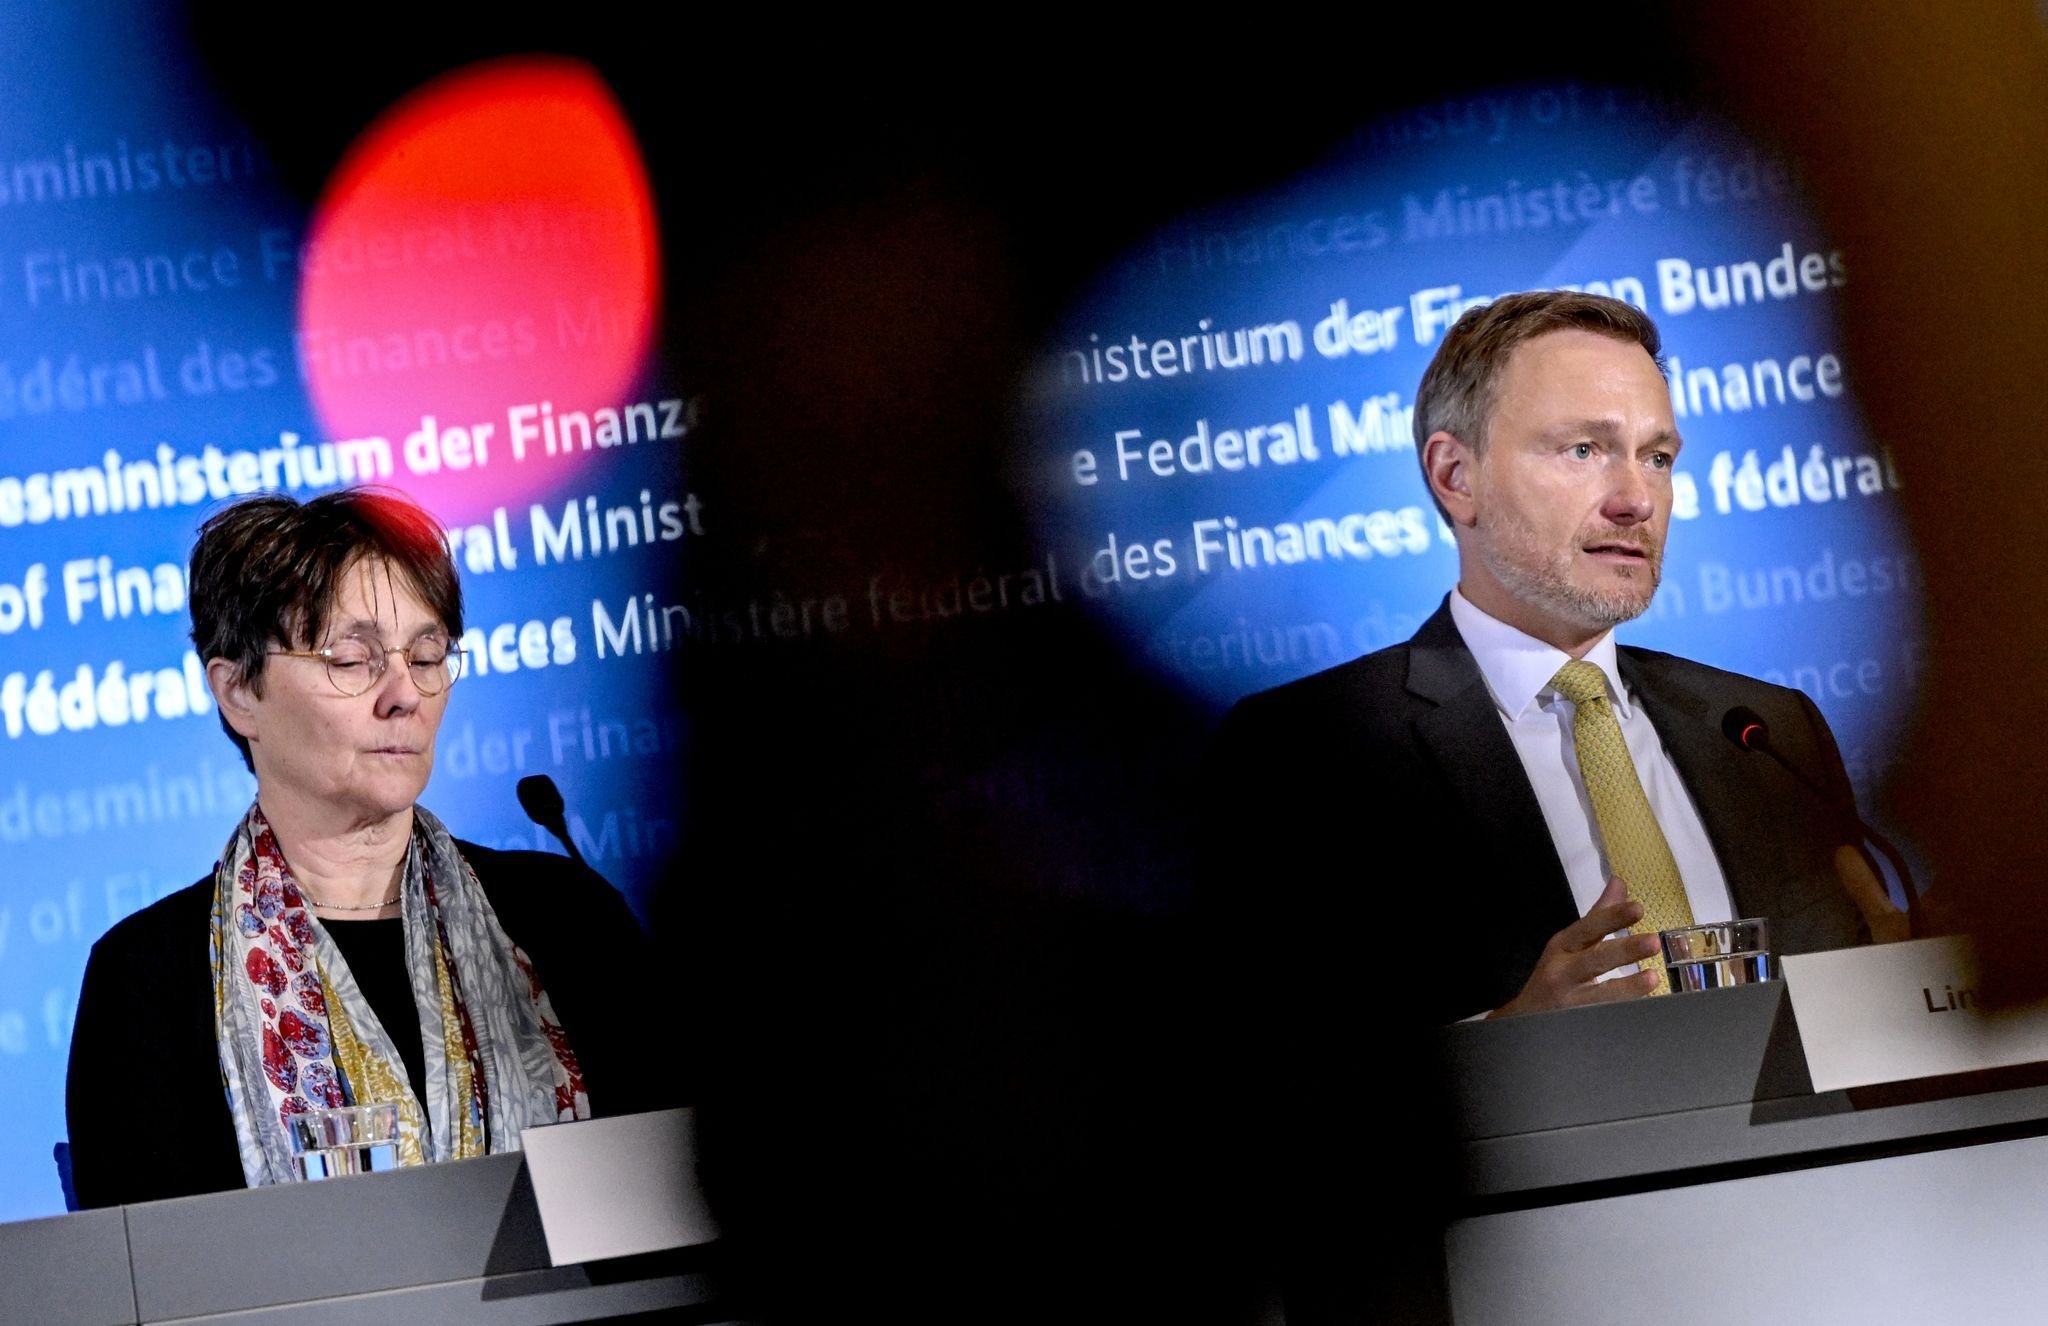 Bund–Länder–Finanzen: Kieler Ministerin attackiert Lindner